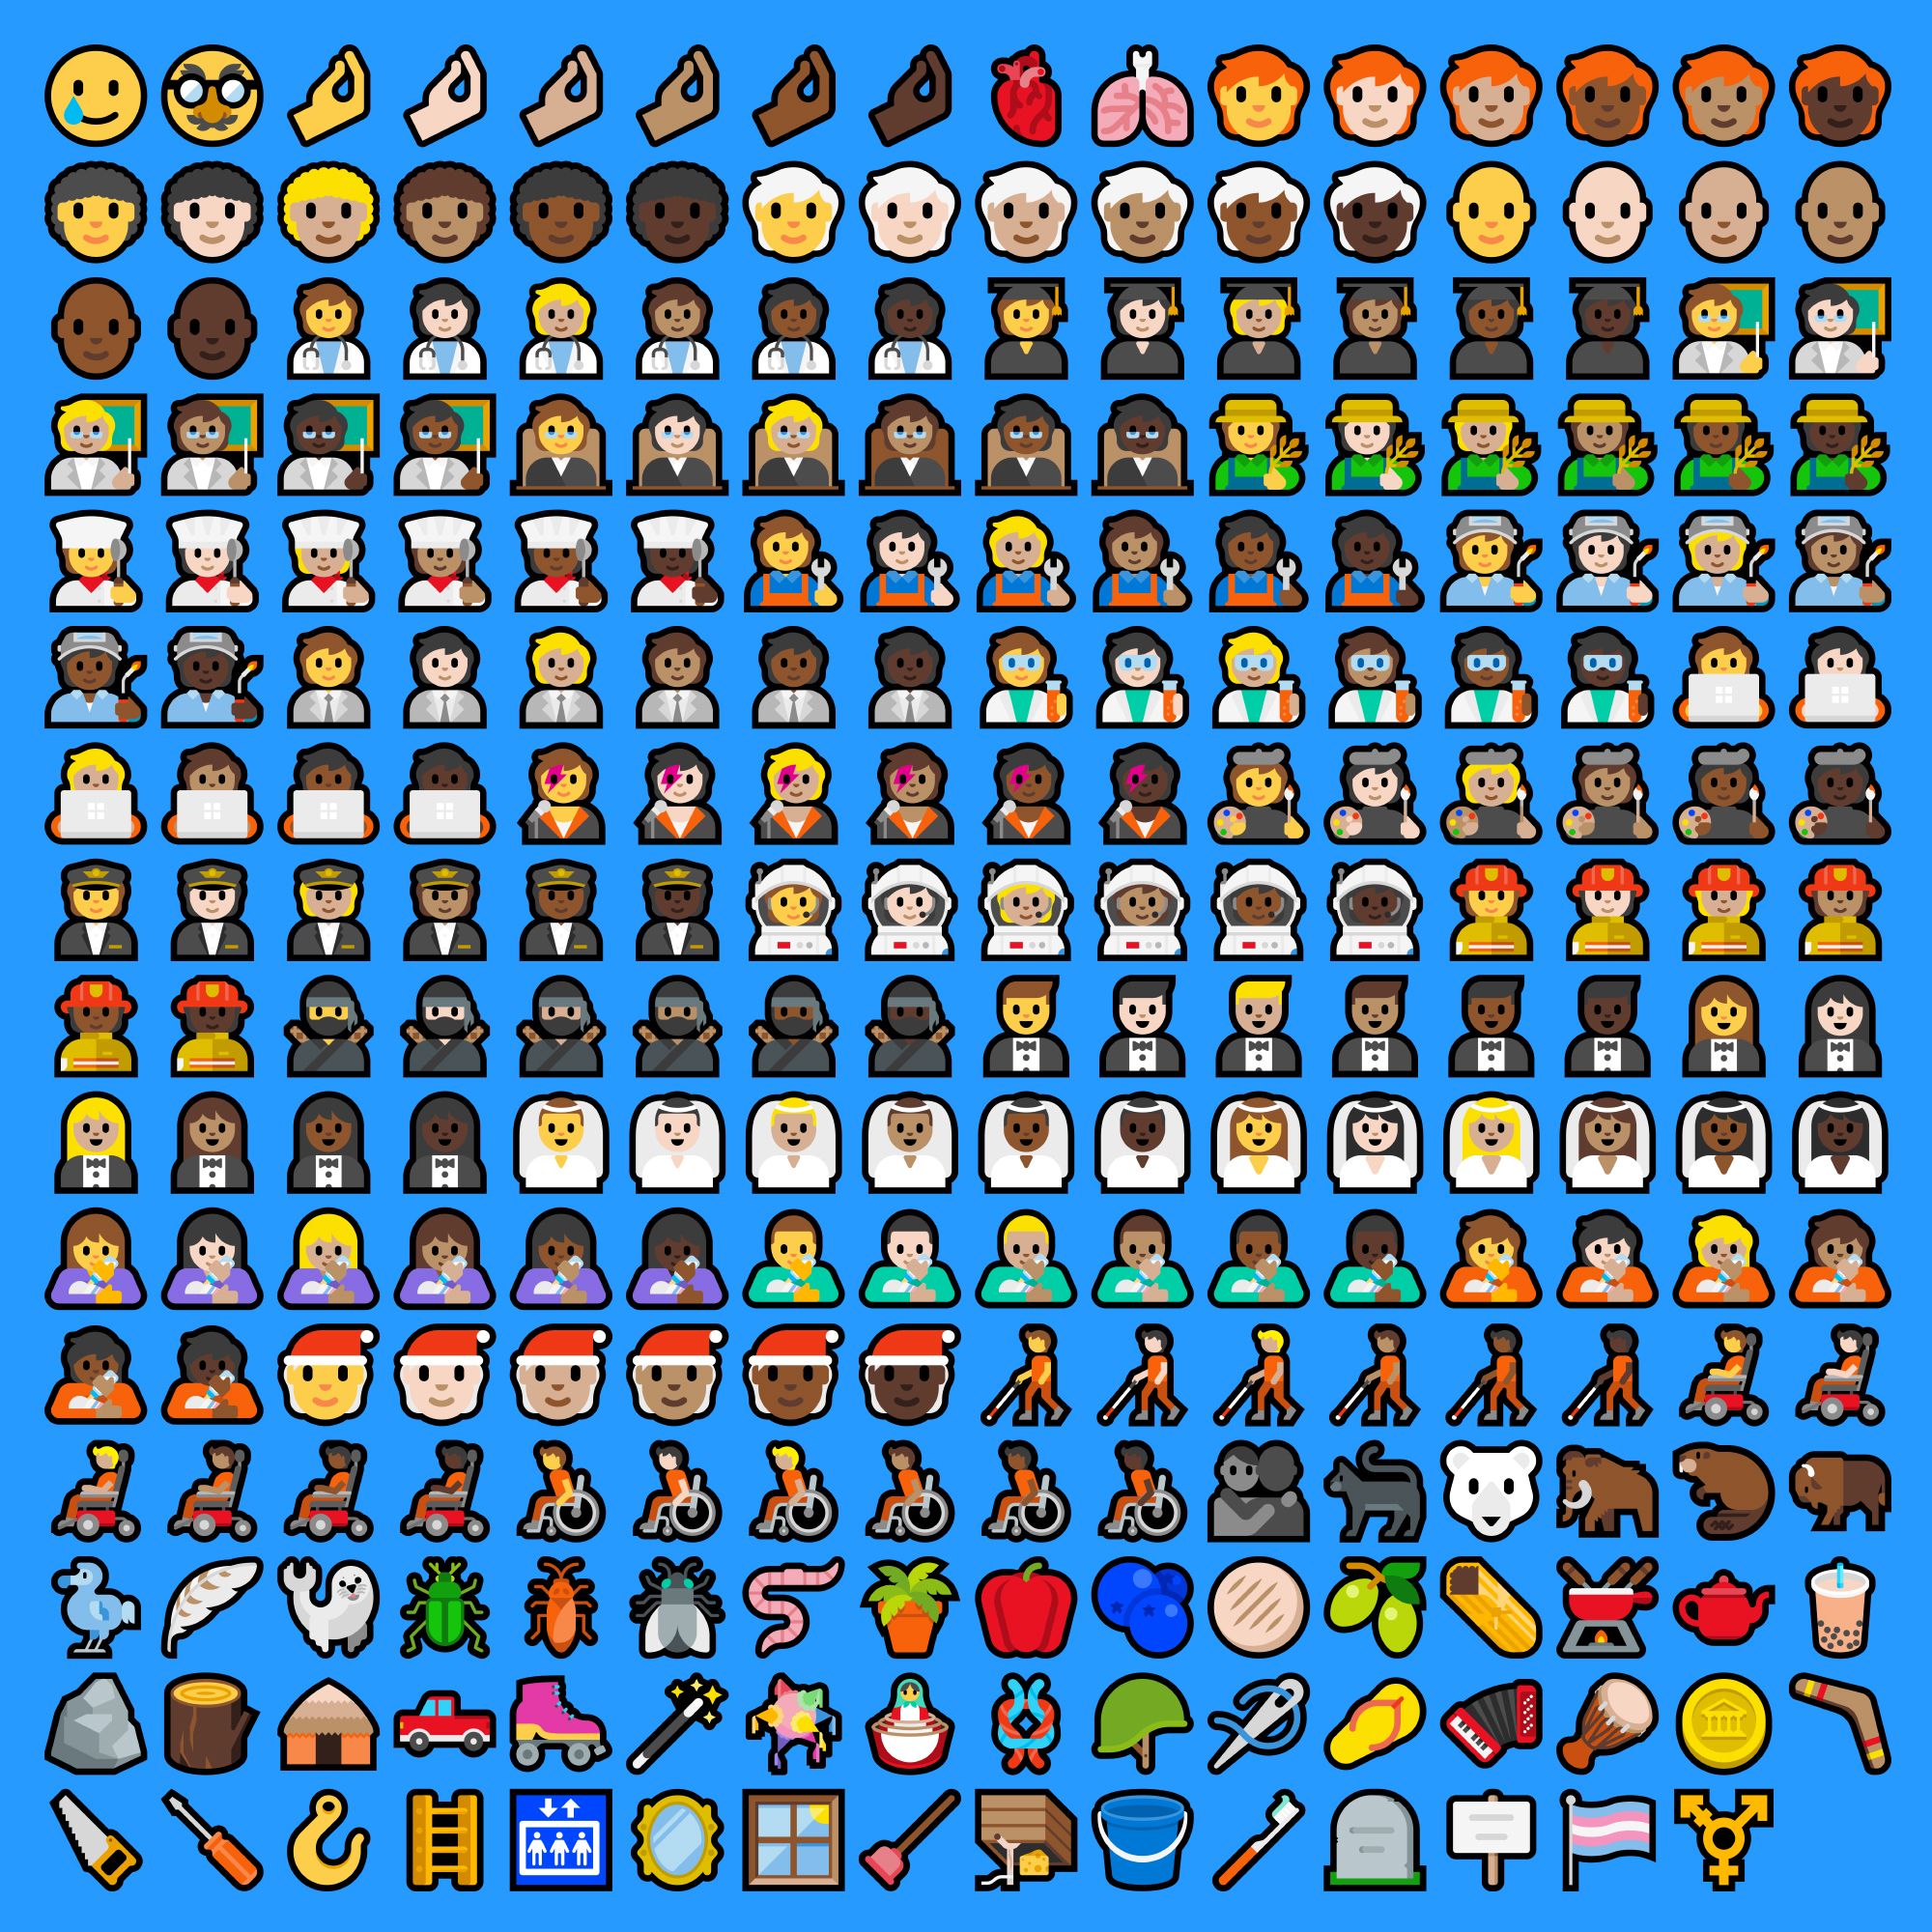 Emojipedia-Windows-11-October-Update-All-New-Emojis